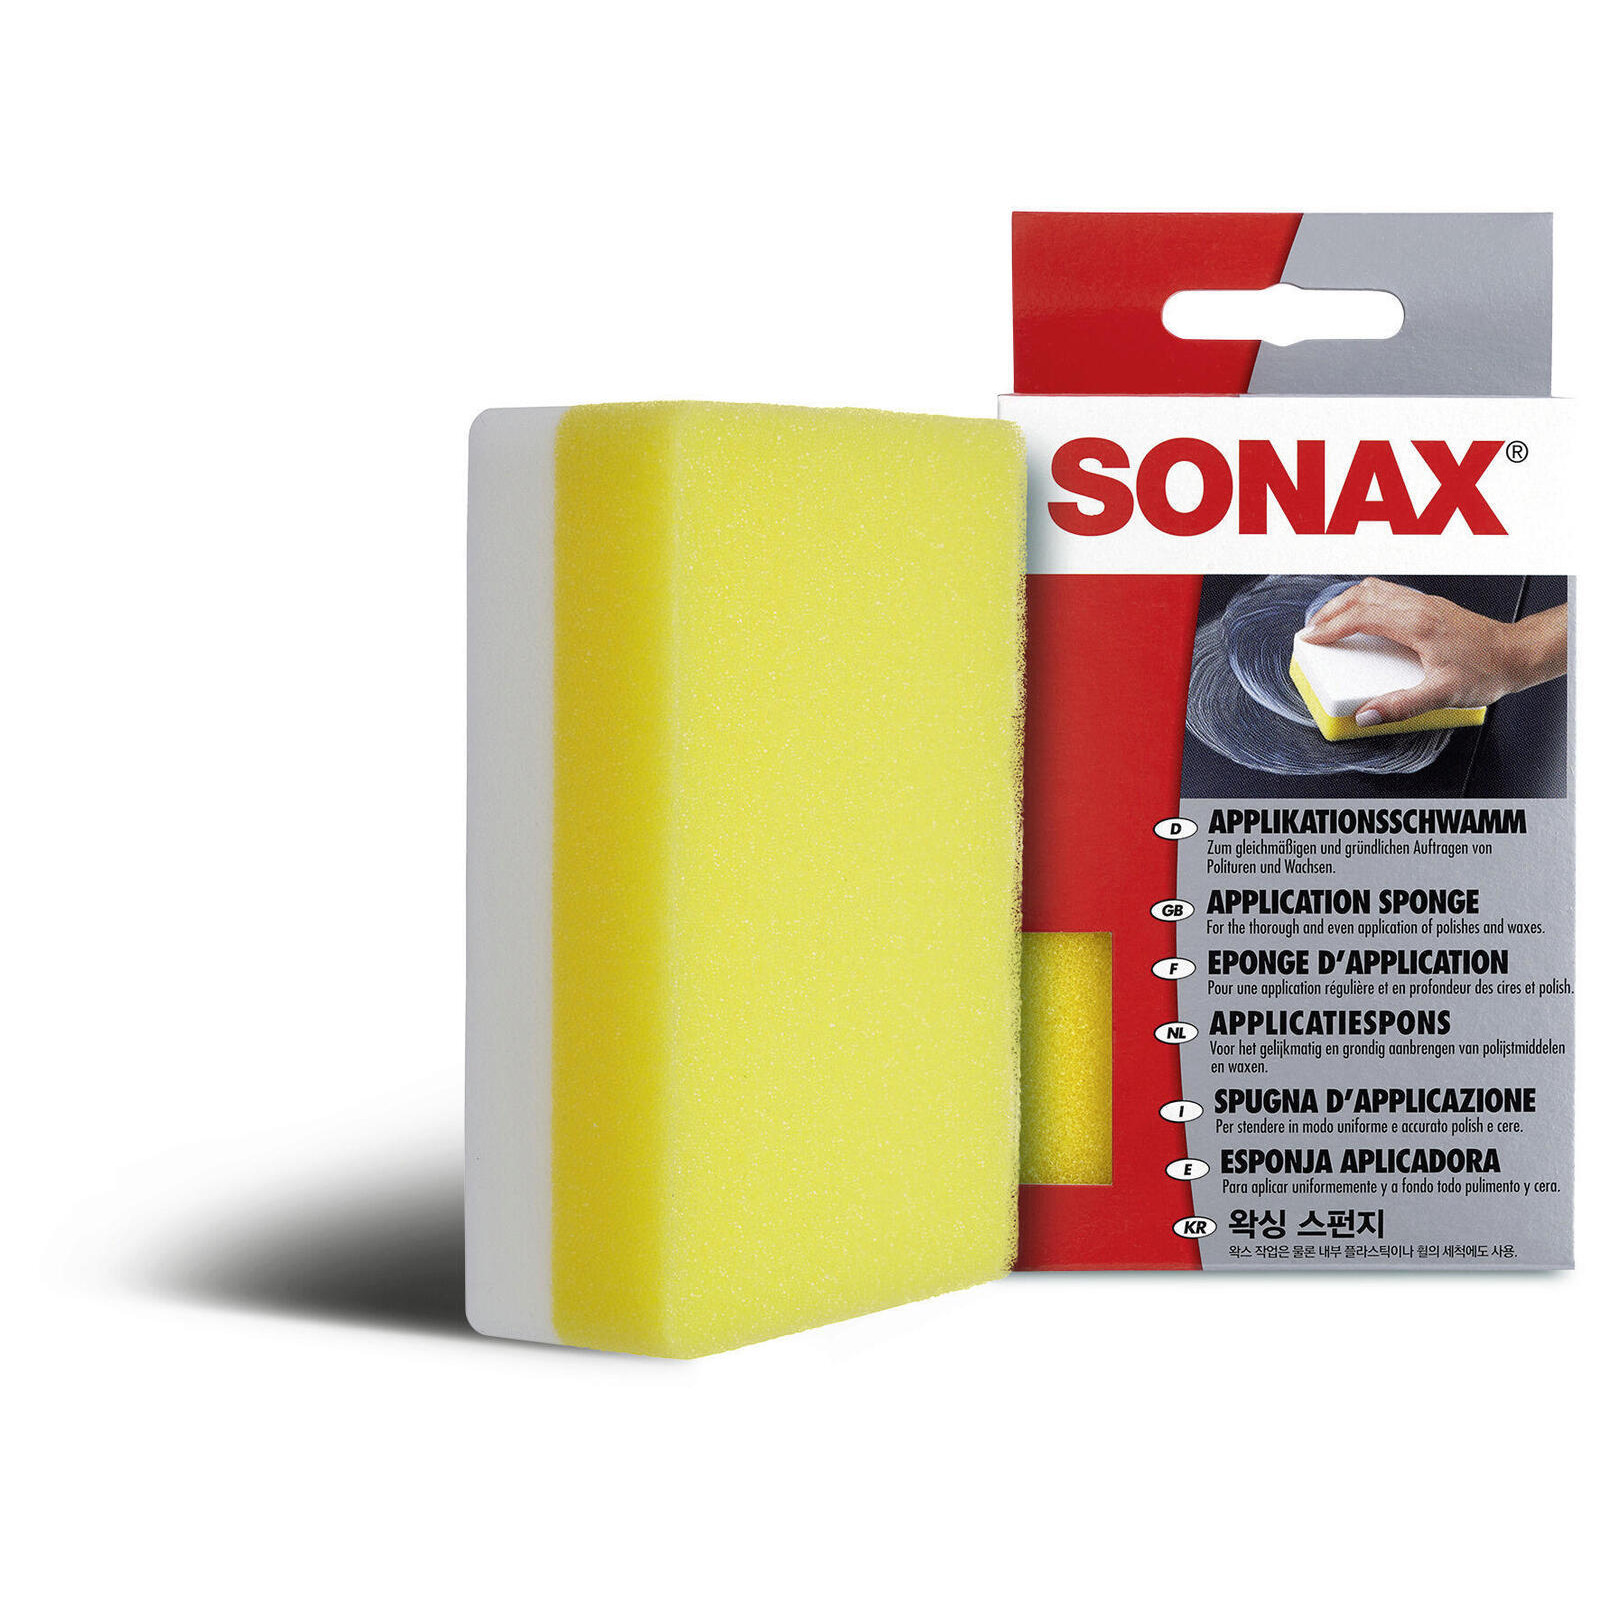 SONAX Sponge Application sponge